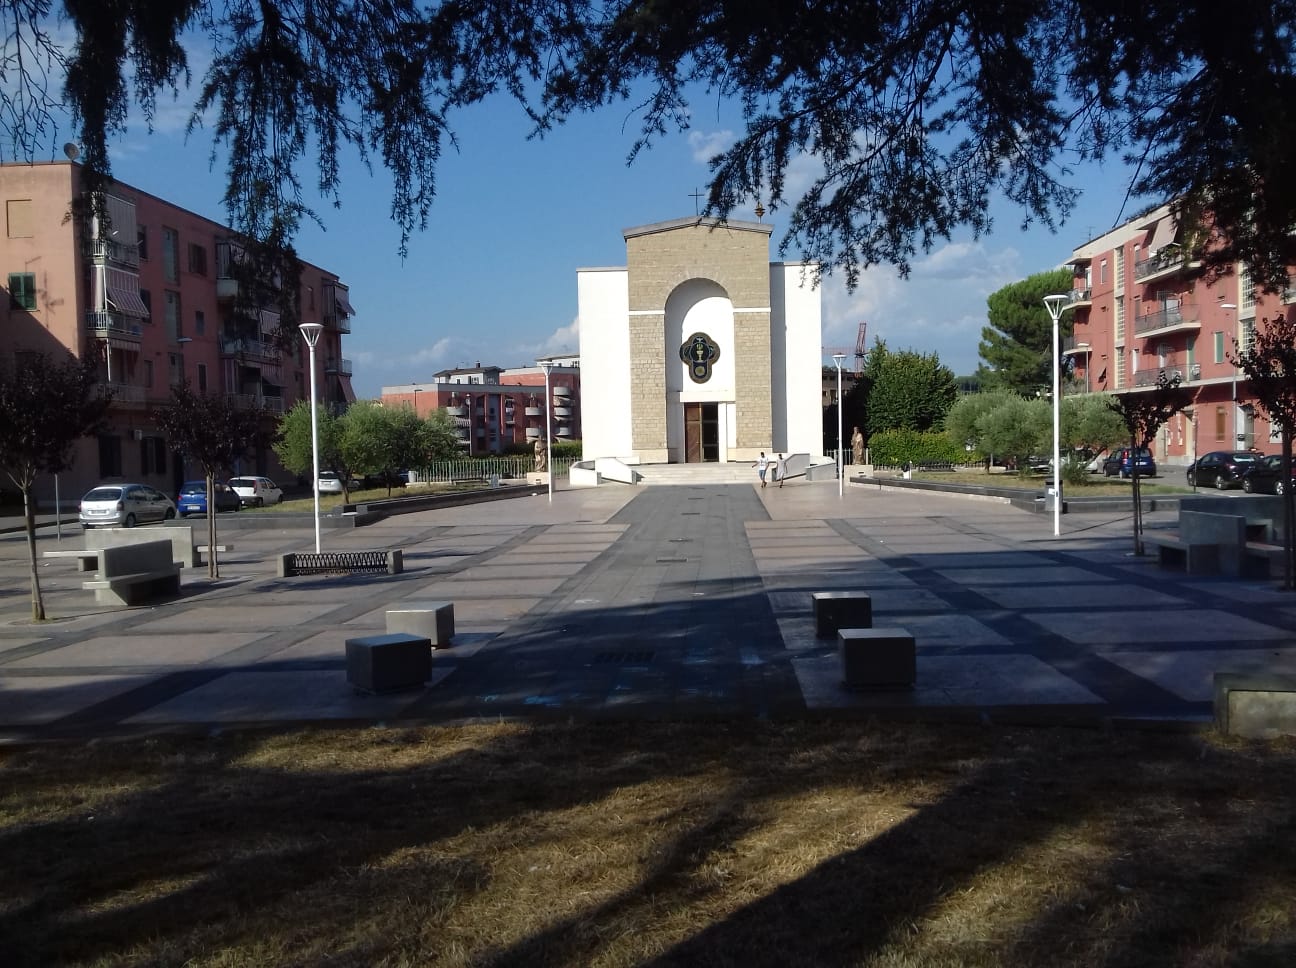 Benevento| Pulizia in città, Feleppa: si riparte dal Rione Libertà